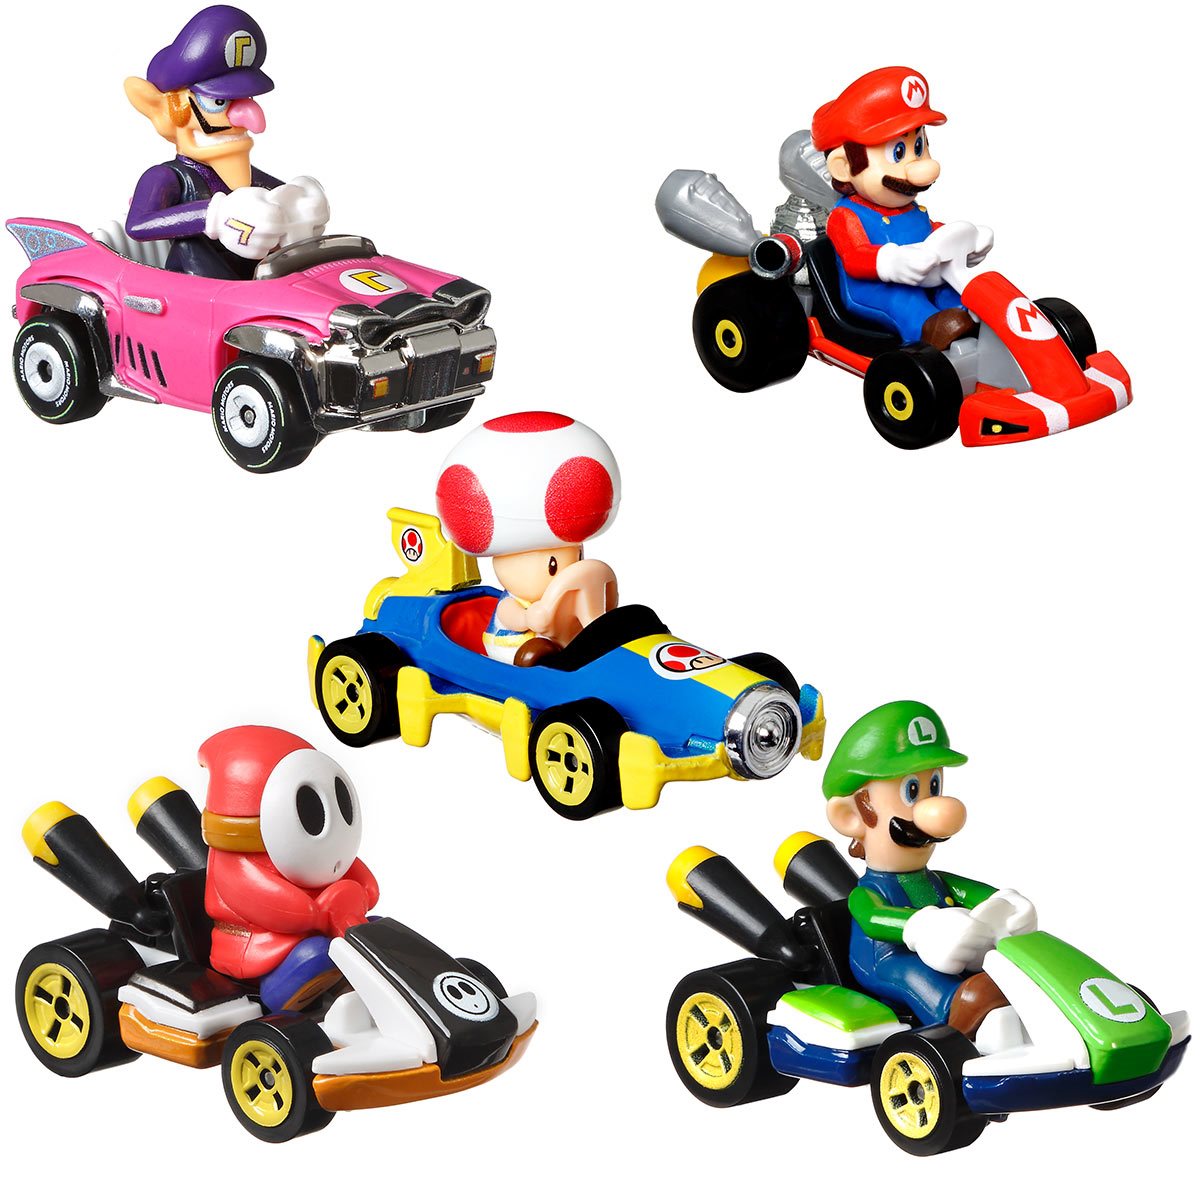 Hot Wheels Mario Kart Collectors Set of 8 - US